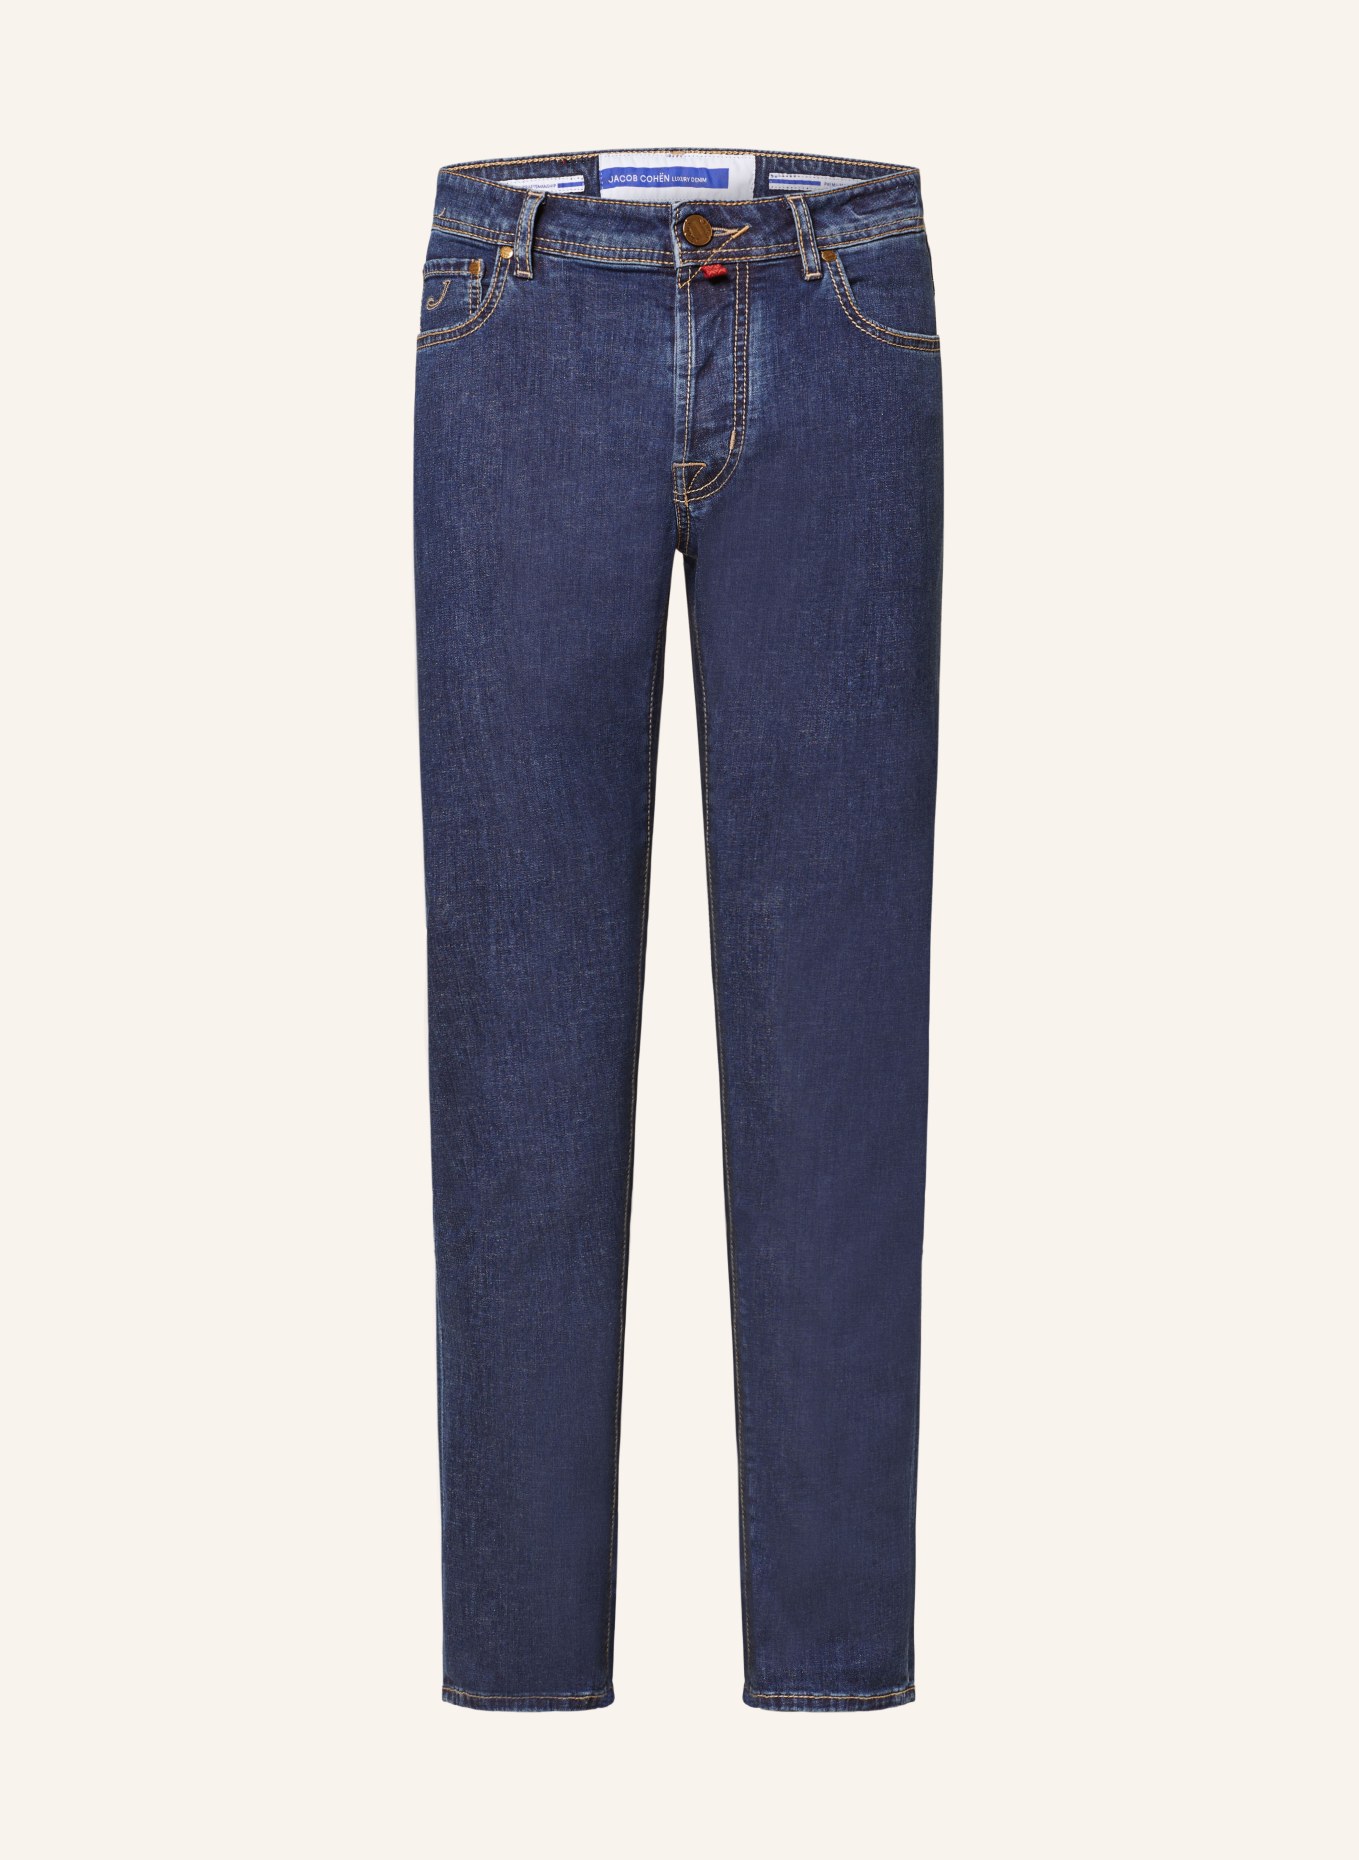 JACOB COHEN Jeans BARD Slim Fit, Farbe: 673D Dark Blue (Bild 1)